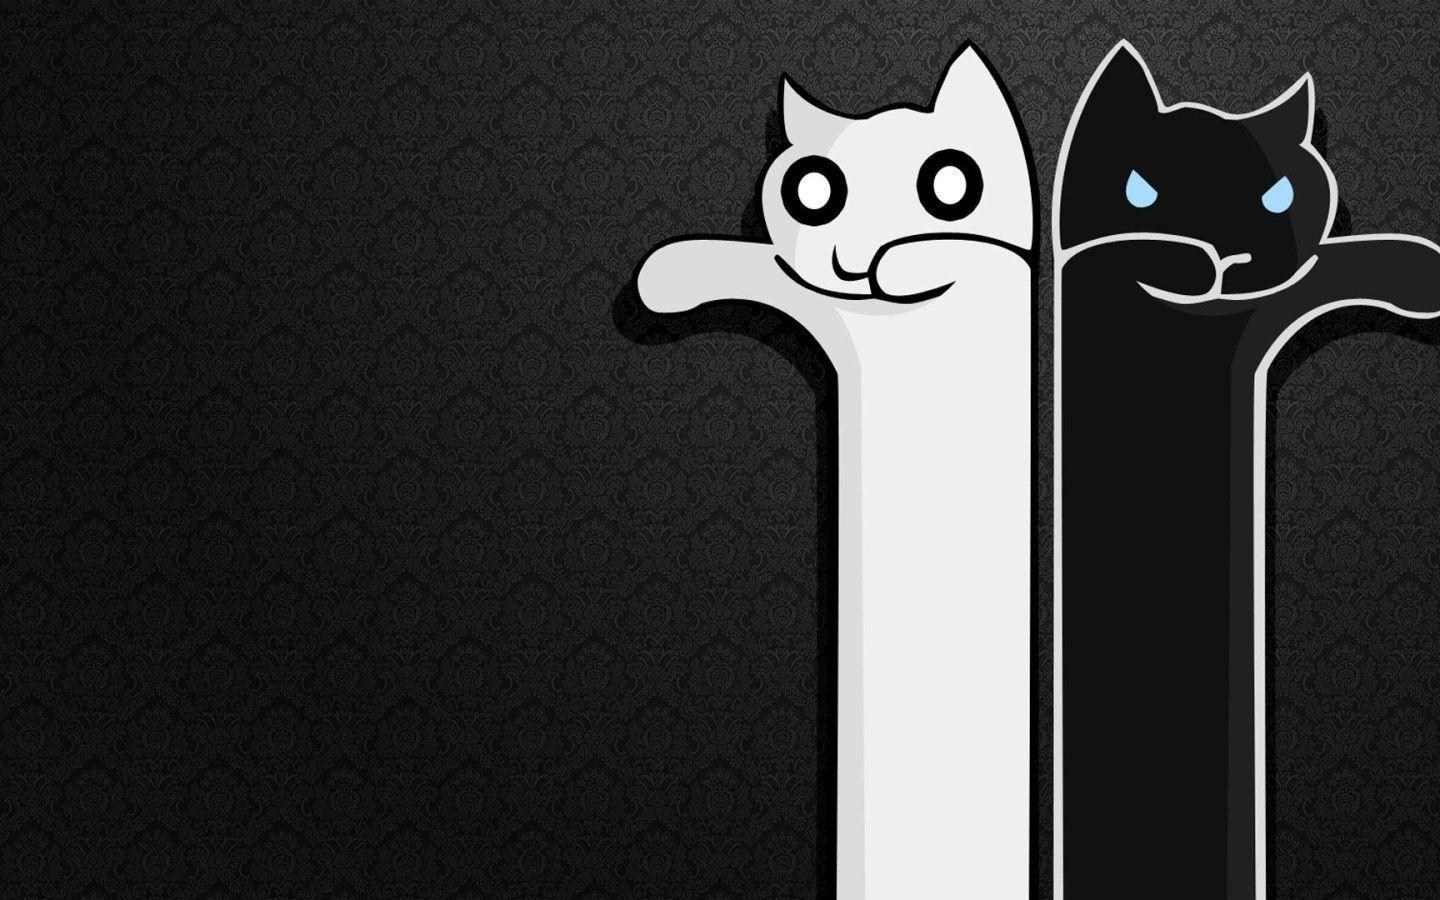 White Cat, Black Cat desktop PC and Mac wallpaper